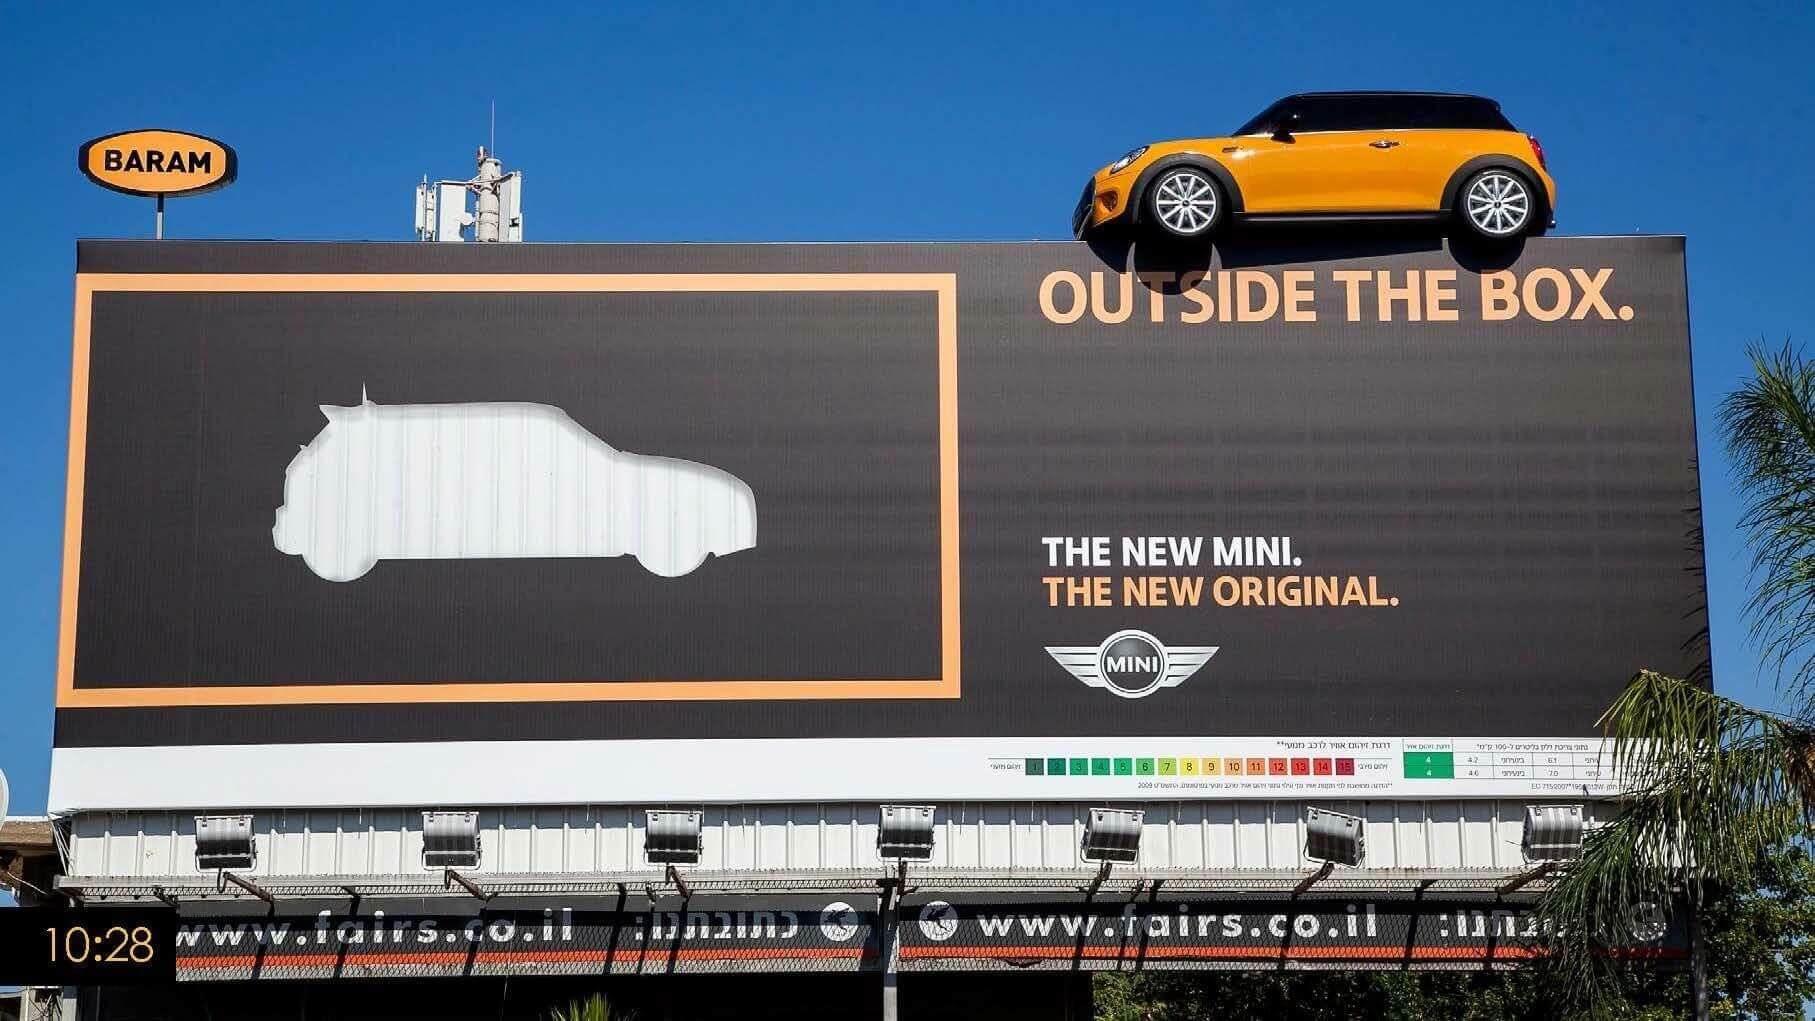 creative mini outdoor billboard advertisement